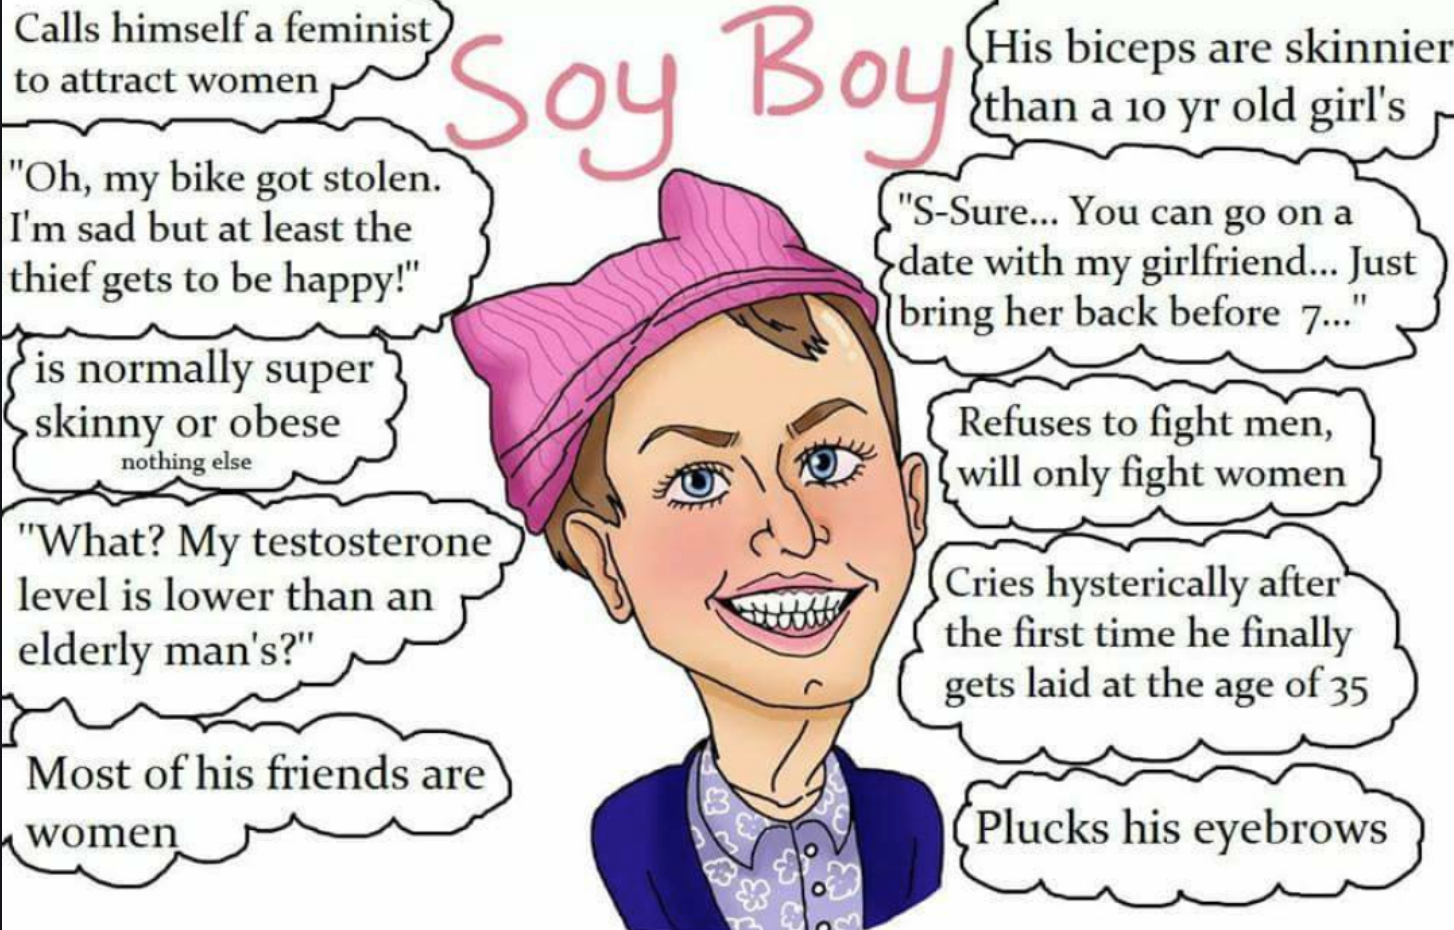 Soy boy - Wikipedia